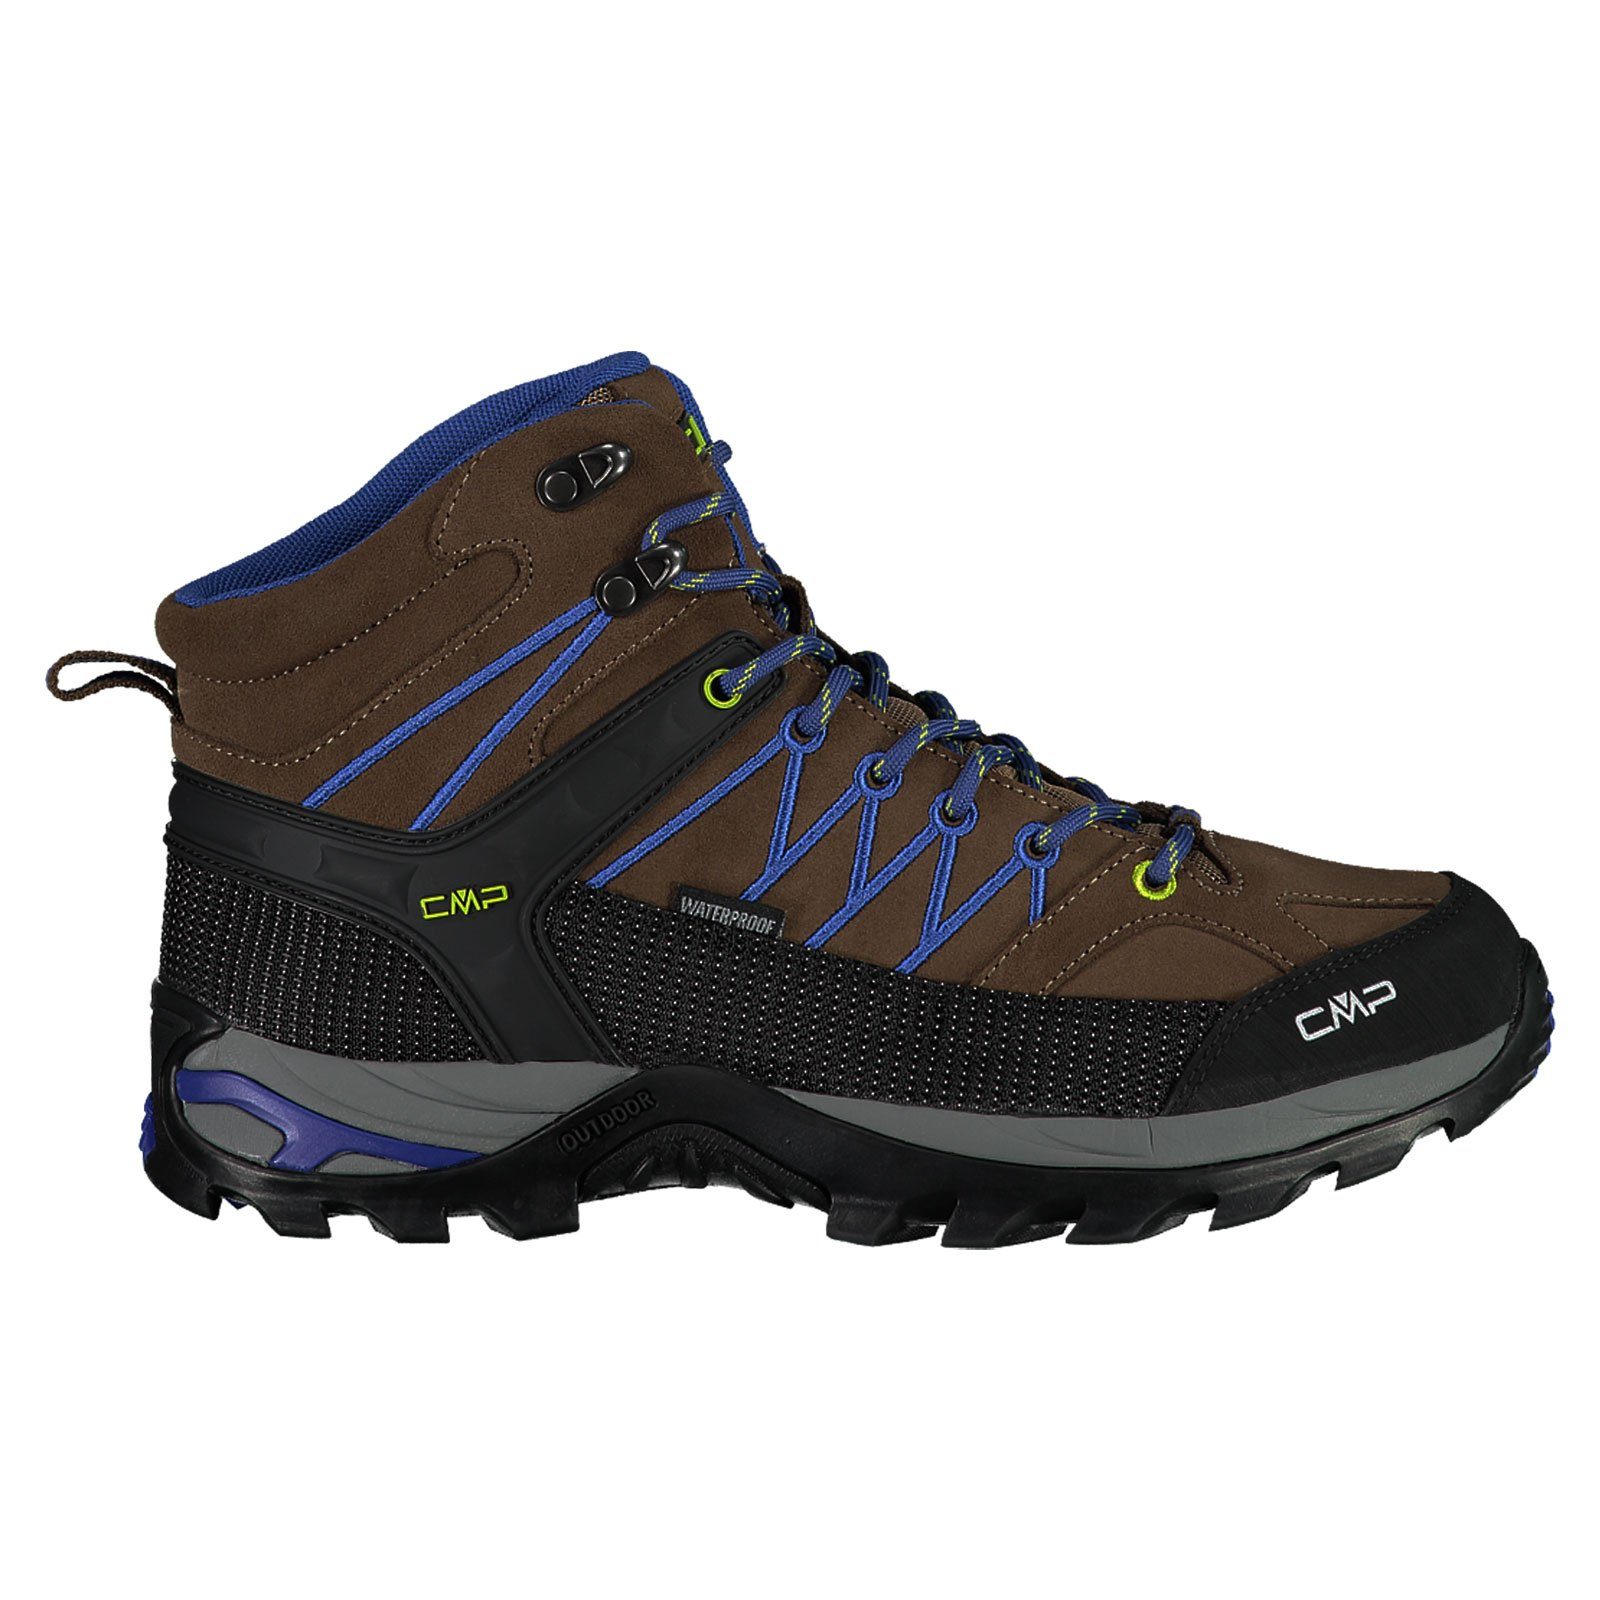 WP mit 09PL Rigel CMP Protect® castoro Trekkingschuh electric Membran Trekking MID Clima Shoe